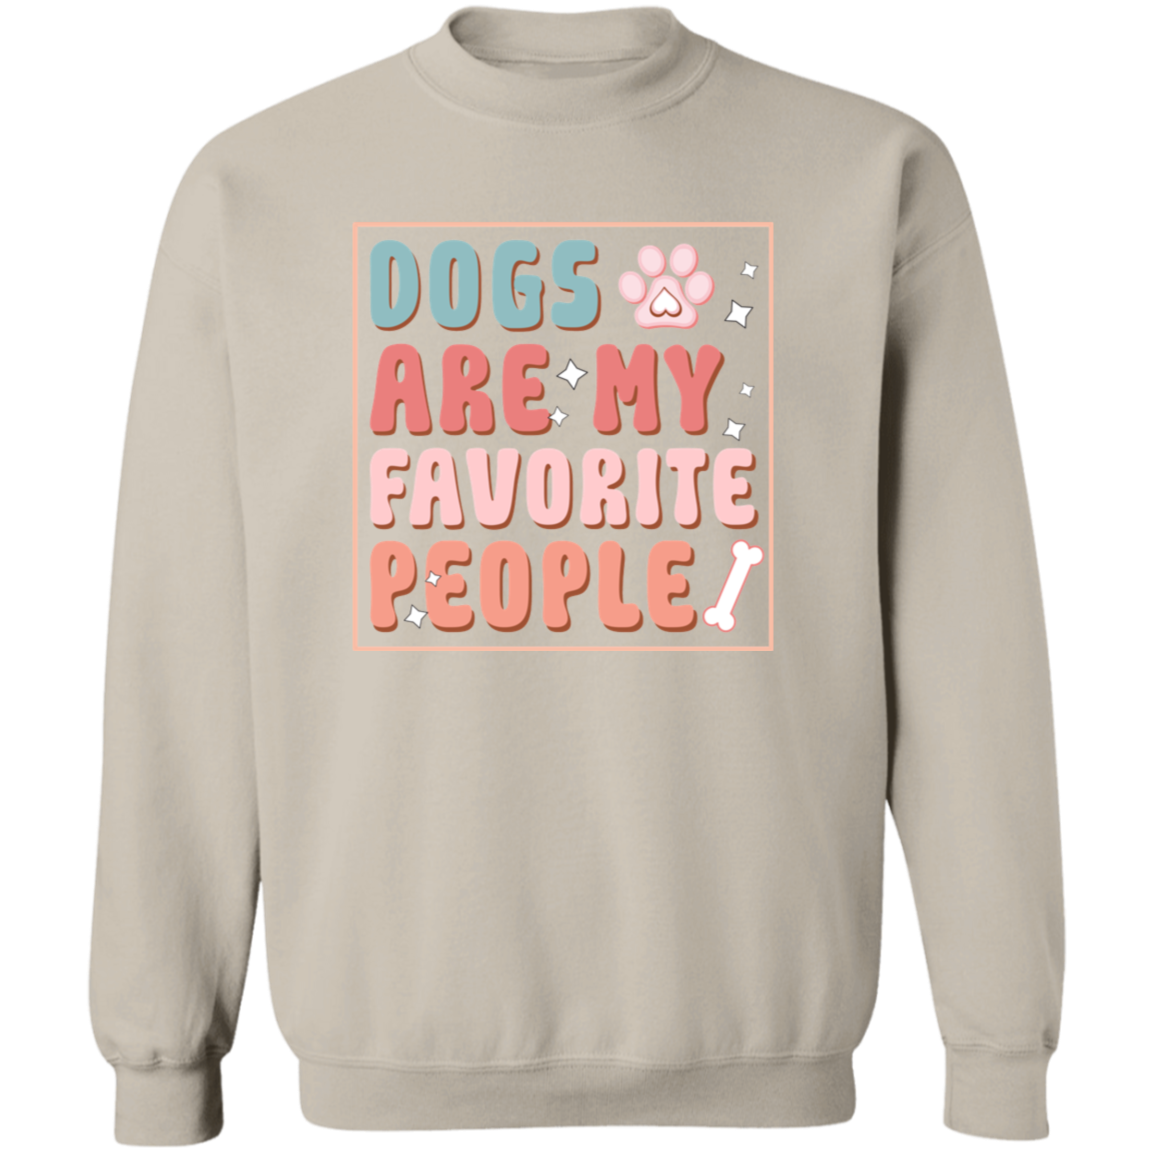 Dogs are My Favorite People Crewneck Pullover Sweatshirt